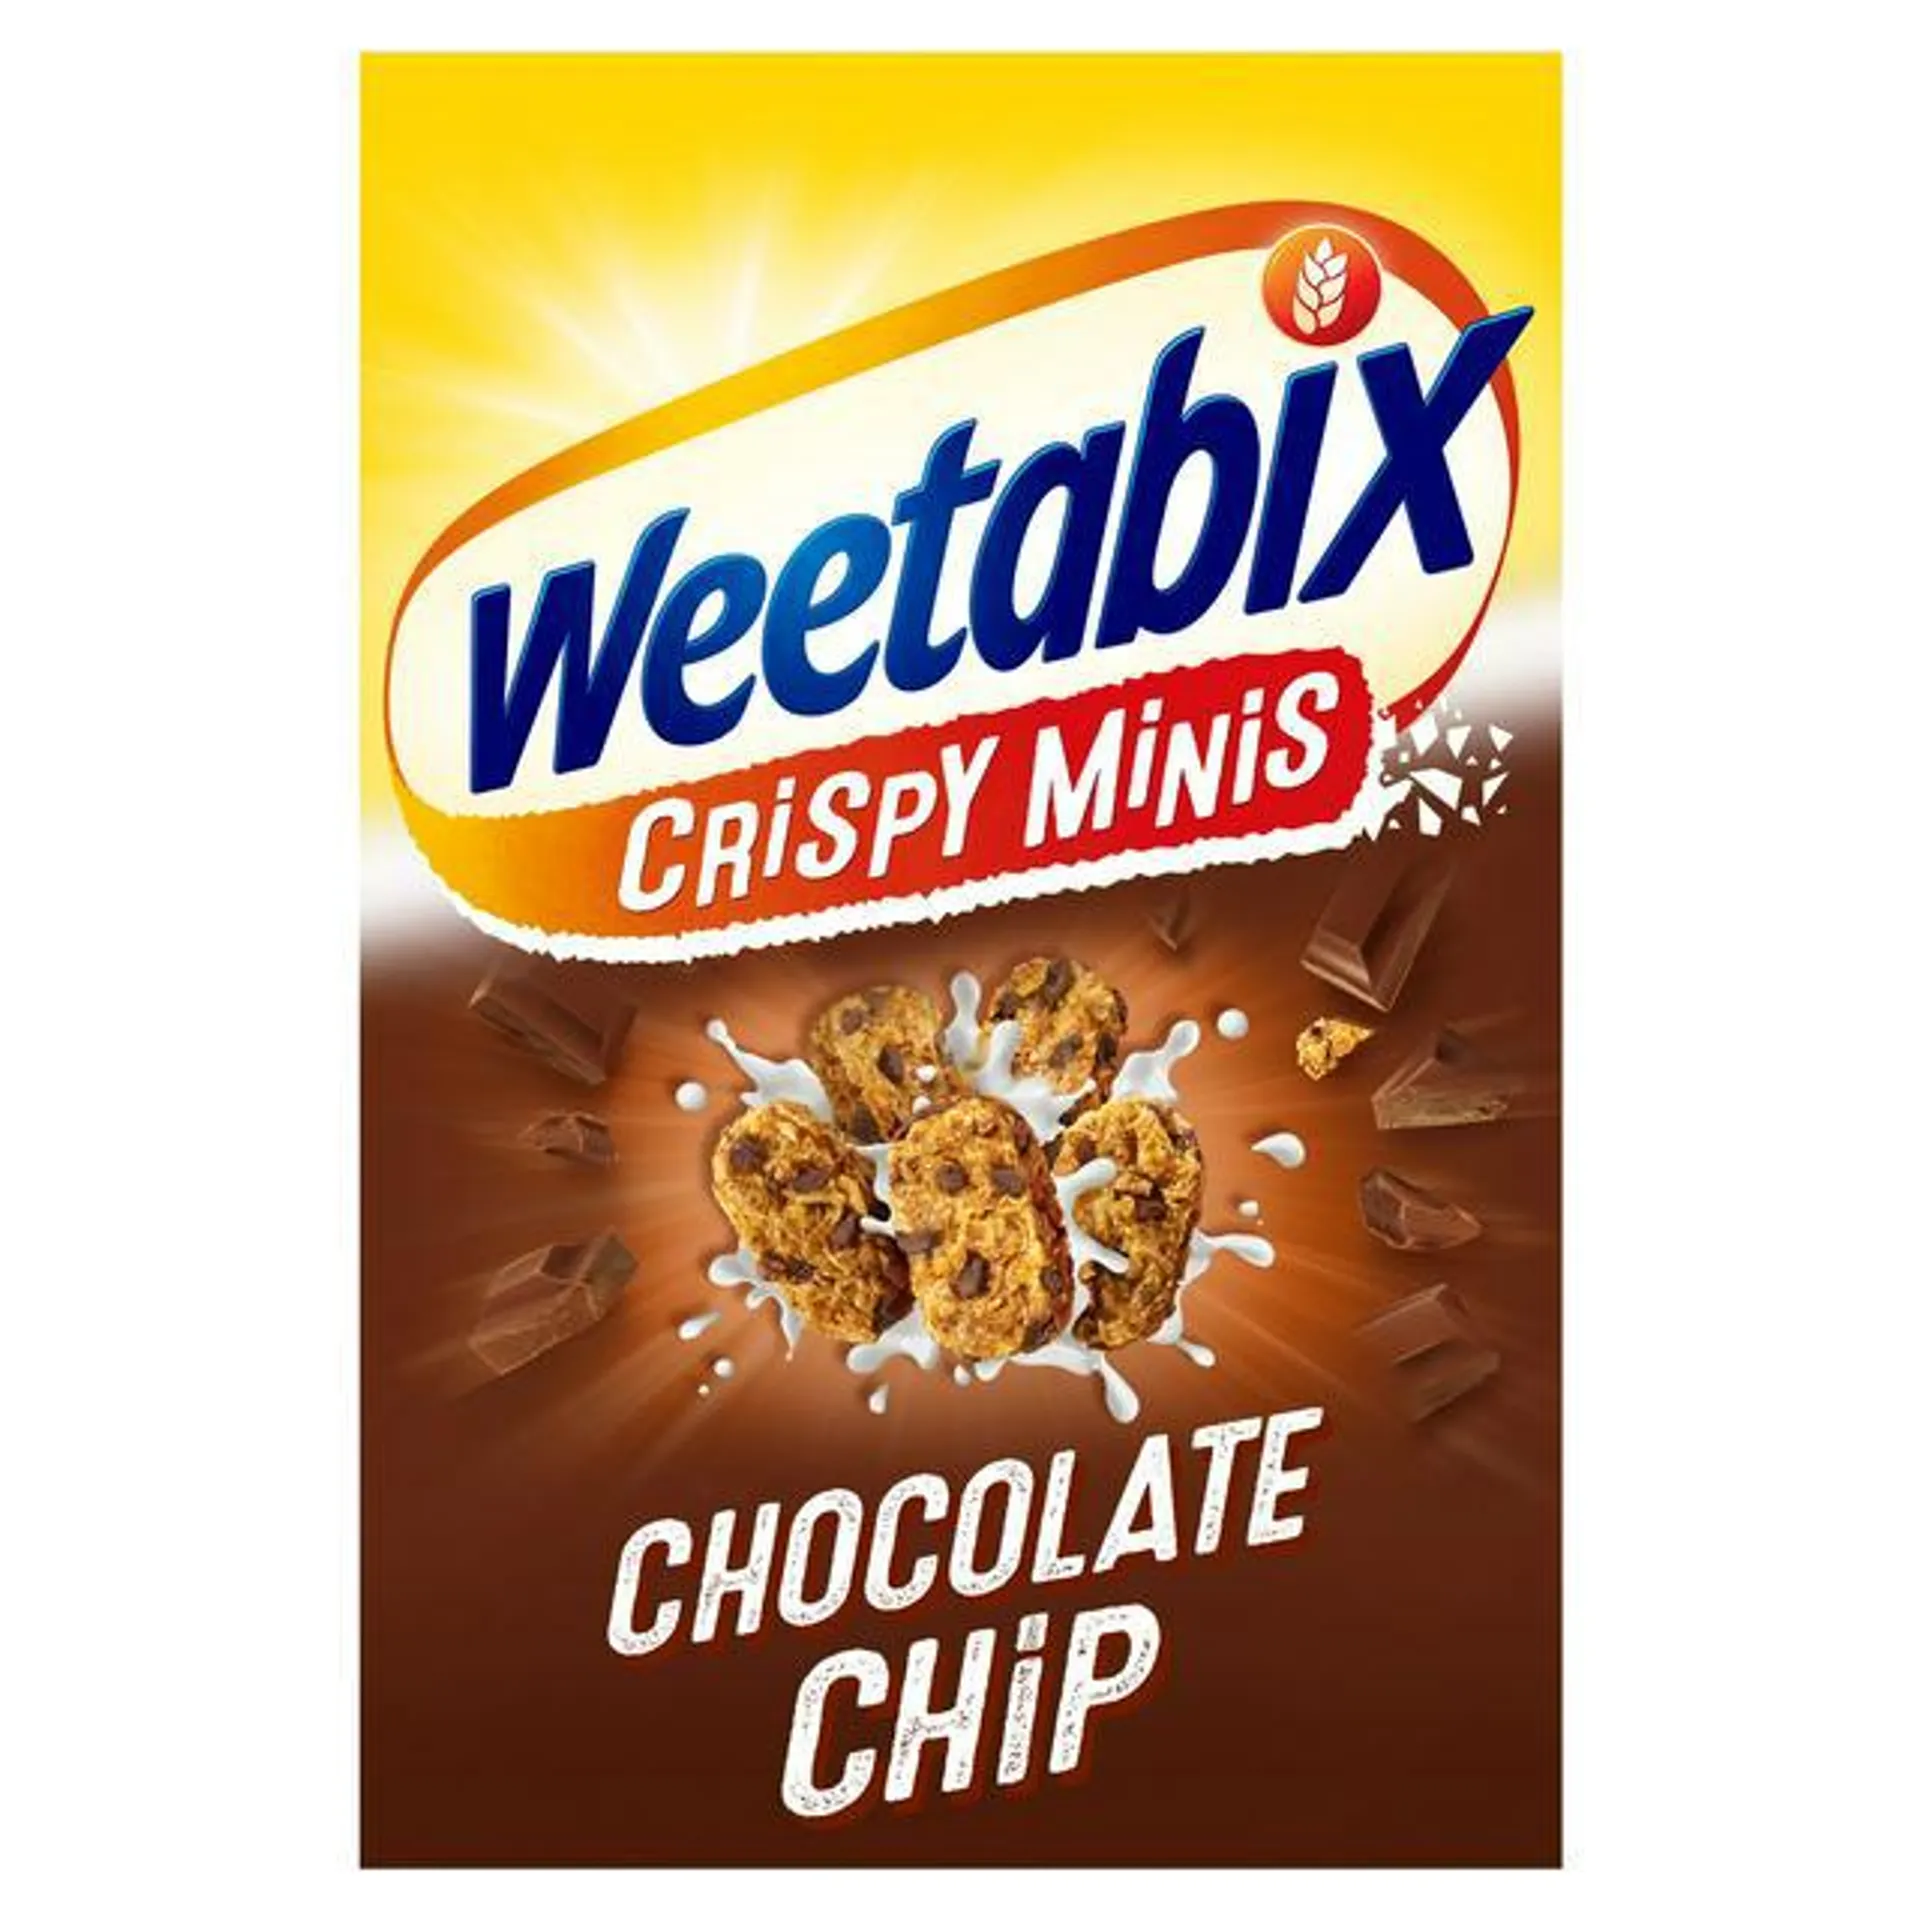 Weetabix Crispy Minis Chocolate Chip 600g